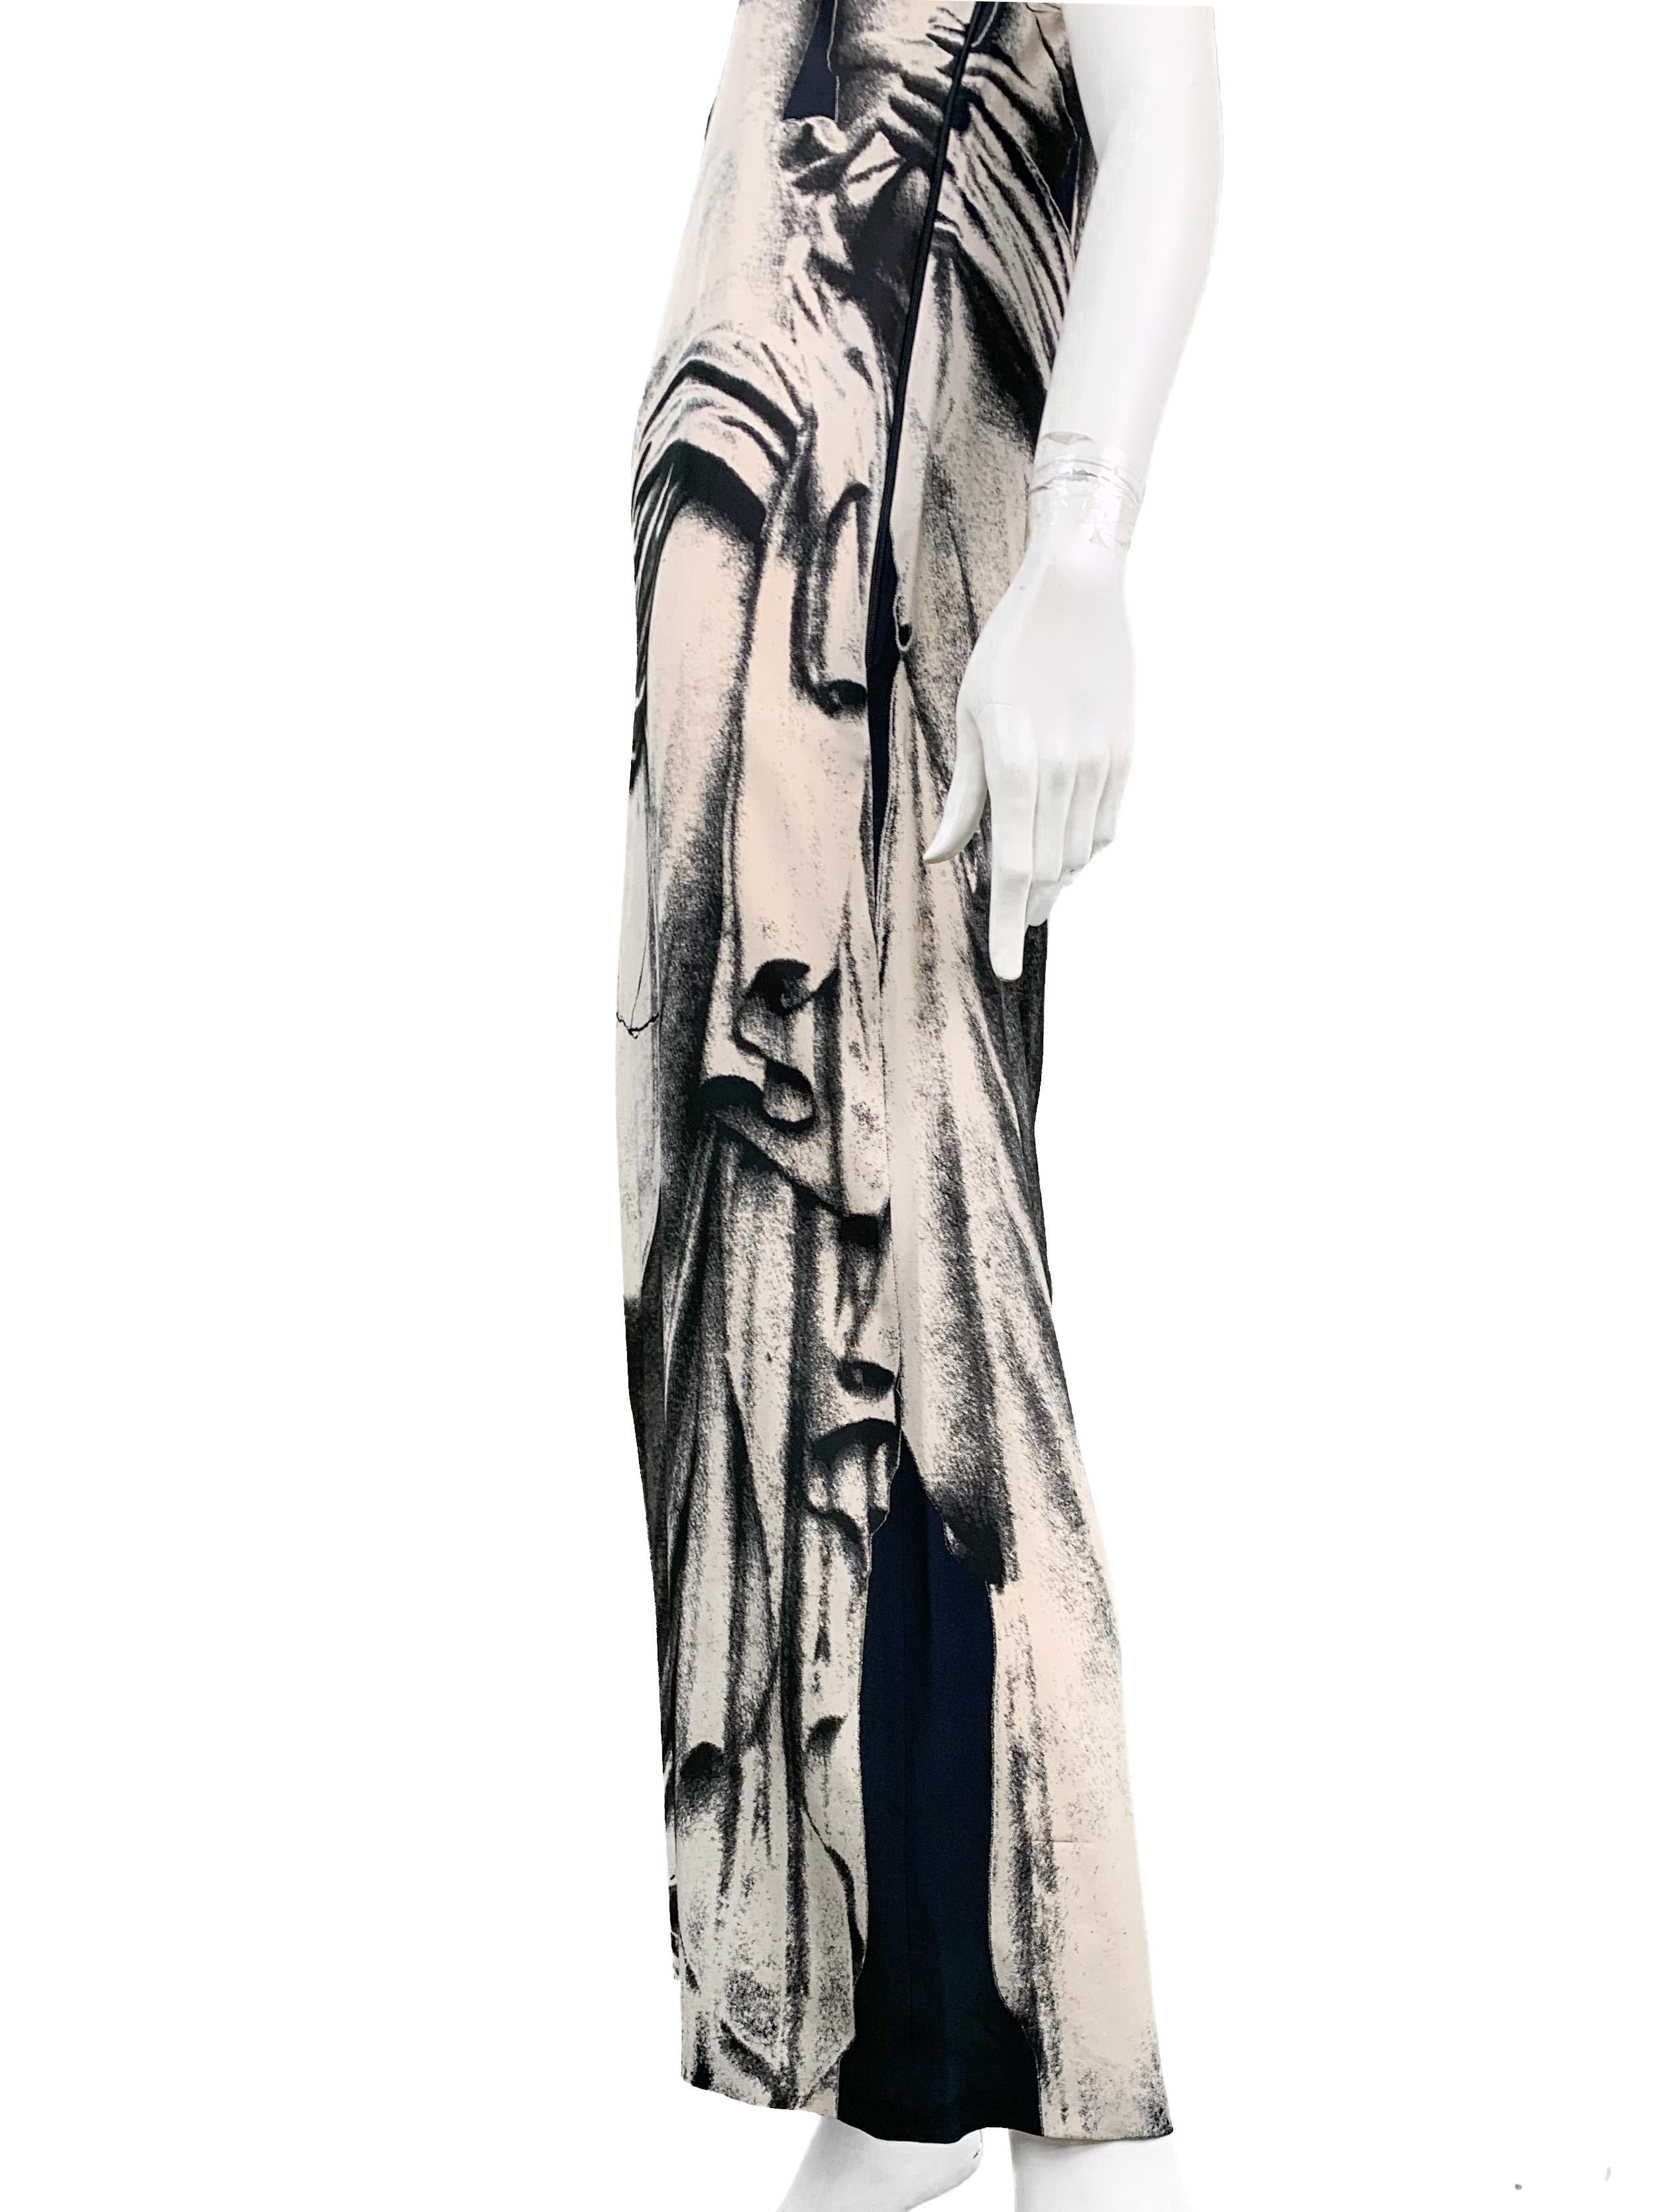 Gaultier Spring 1999 Runway Museum Greek Statue Silk Maxi Dress New w/o Tags 2